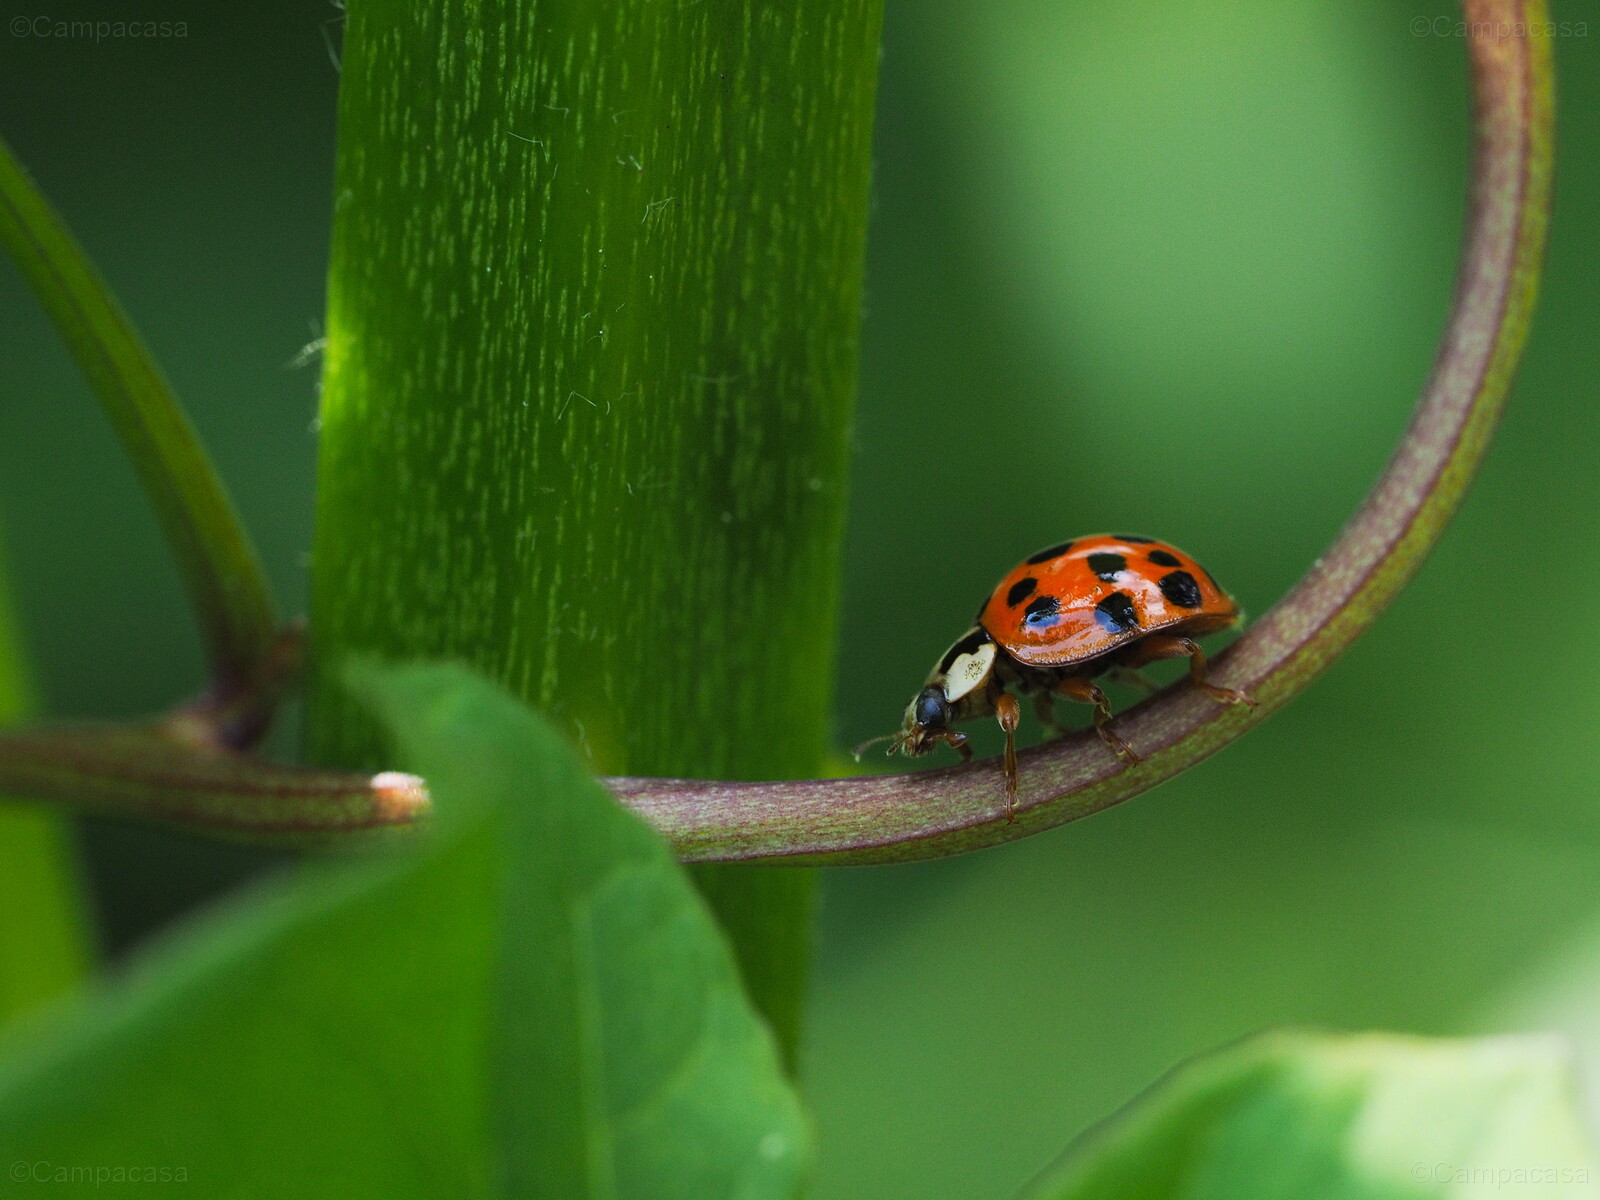 Harlequin ladybird or asian lady beetle